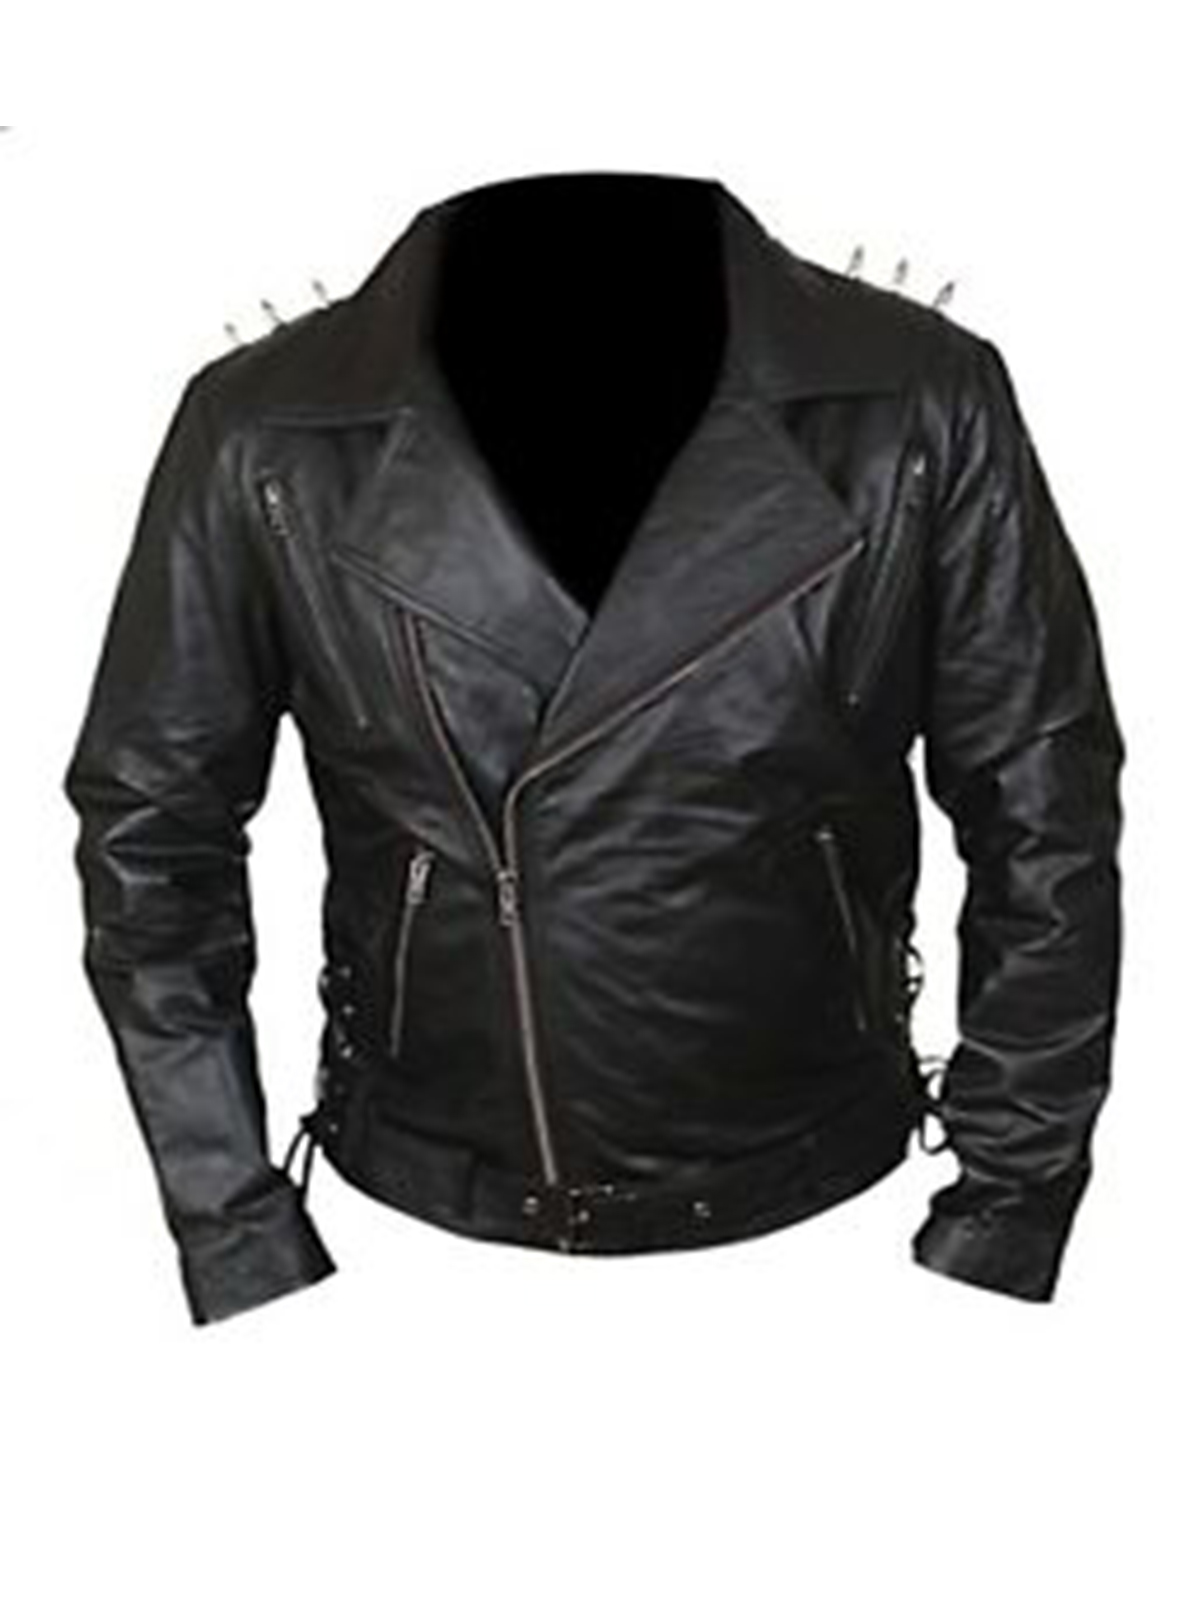 Supreme Vanson Leathers Ghost Rider Jacket Black - Novelship